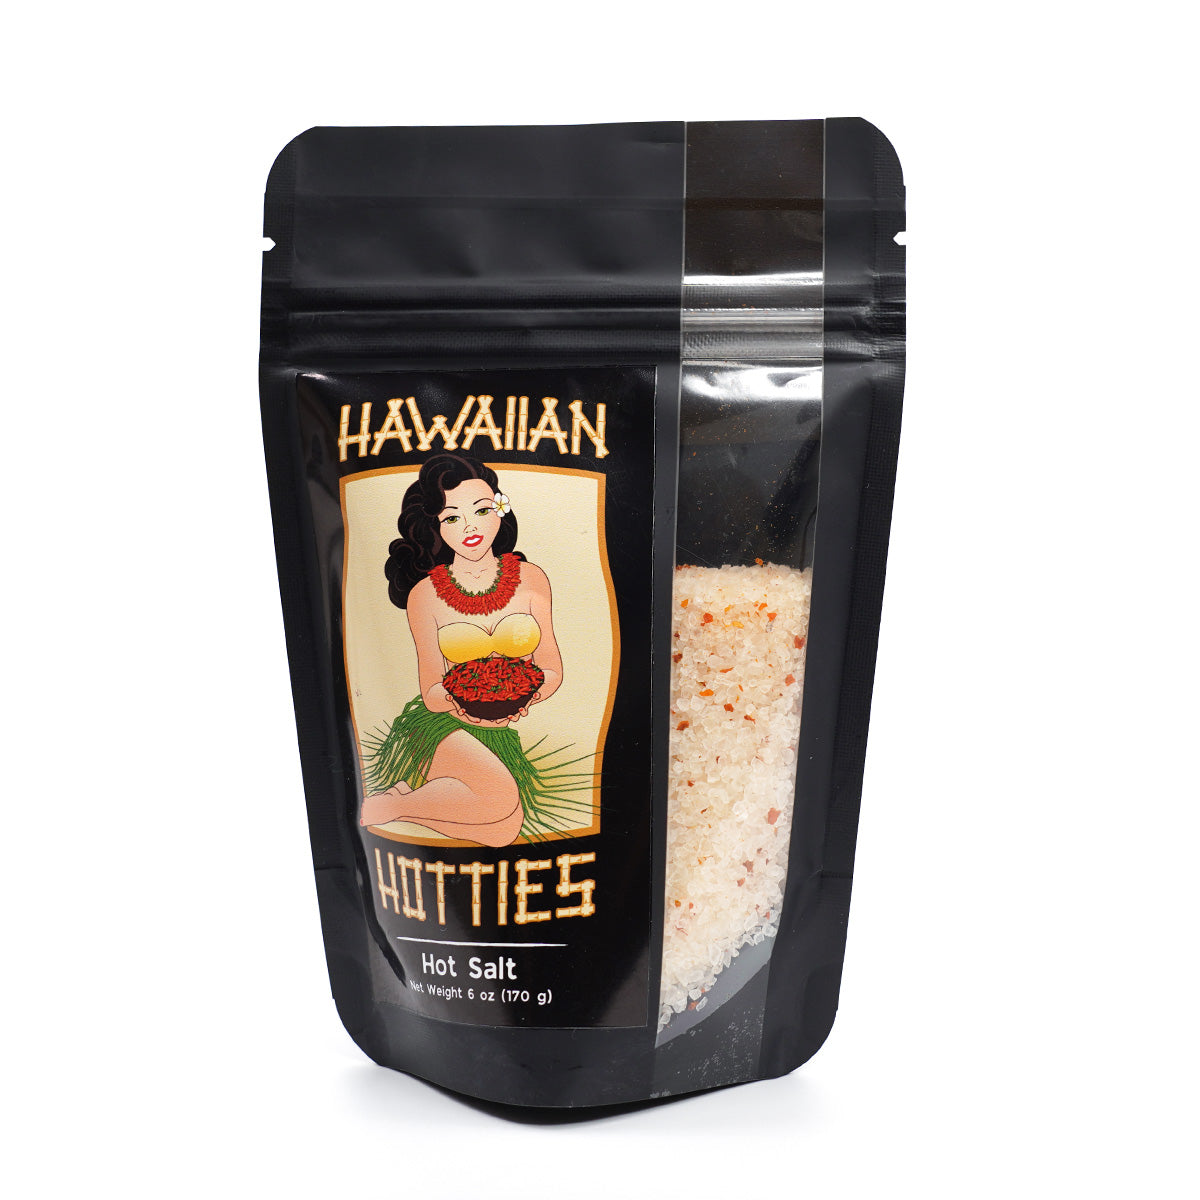 Locally Grown Hawaiian Chili Pepper & Sea Salt Seasoning